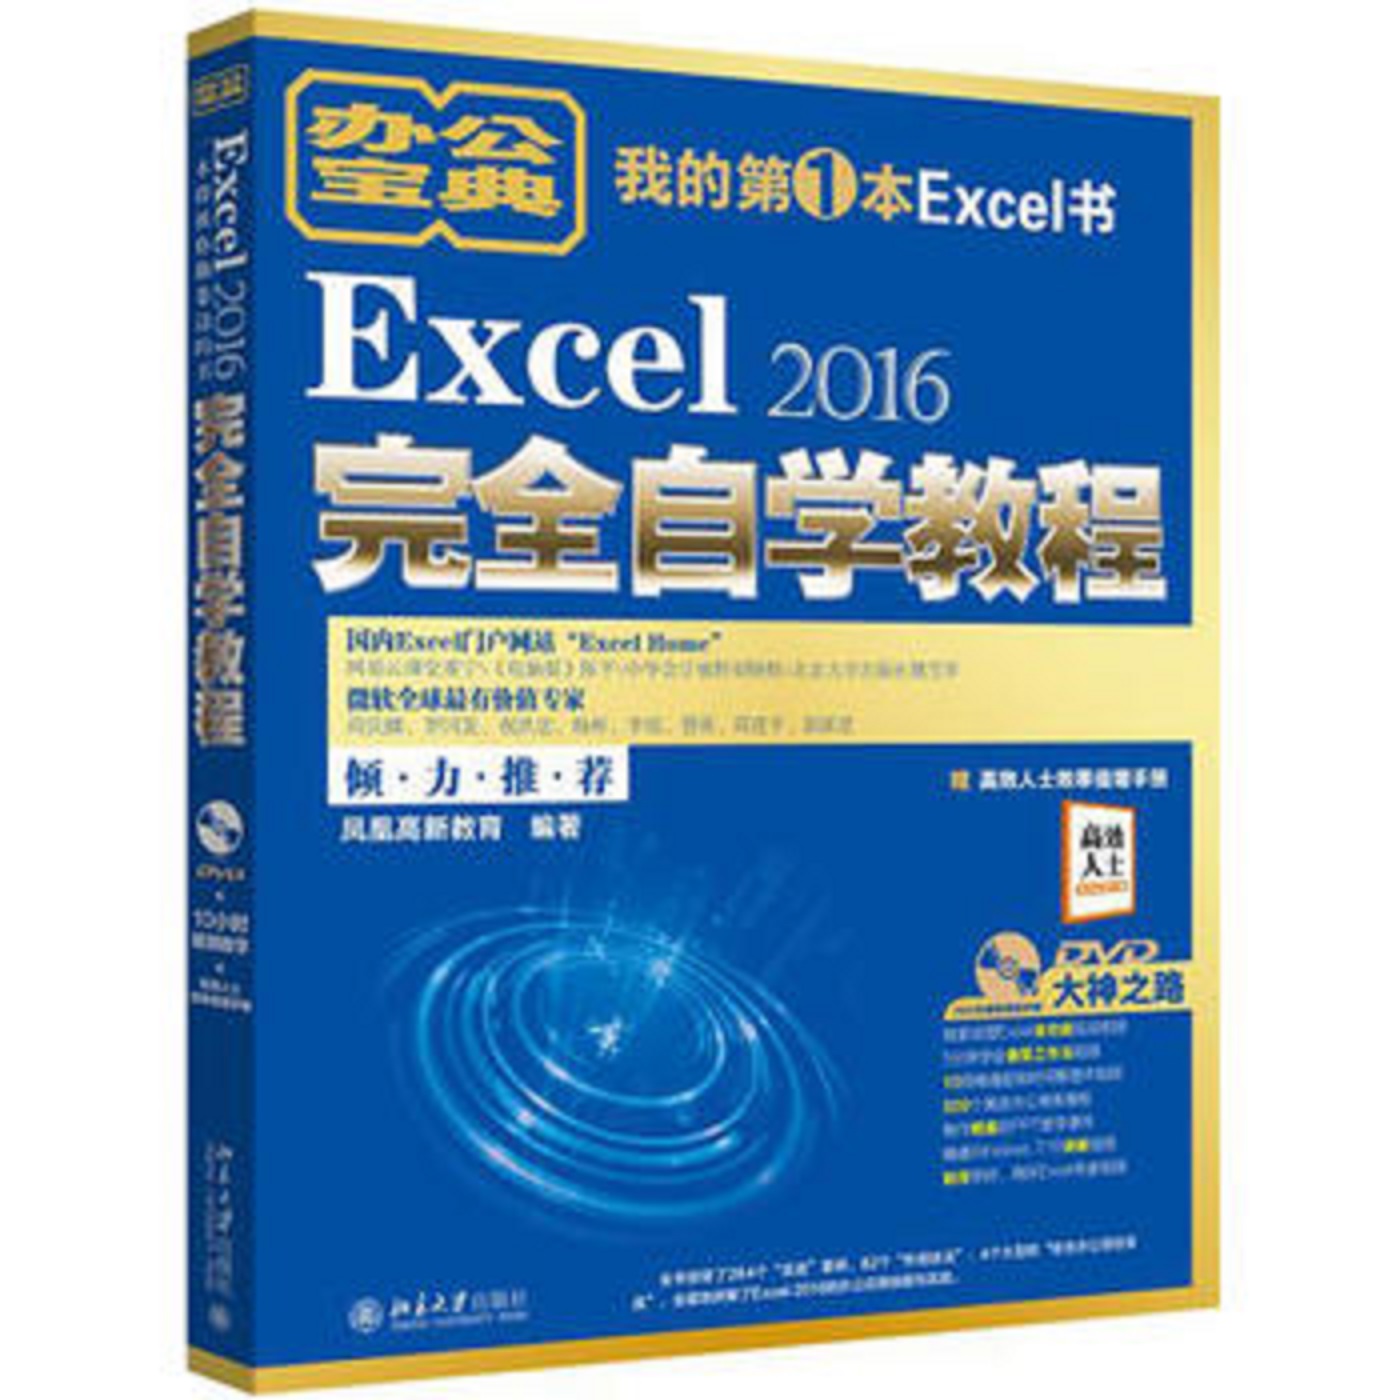 Excel 2016完全自學教程